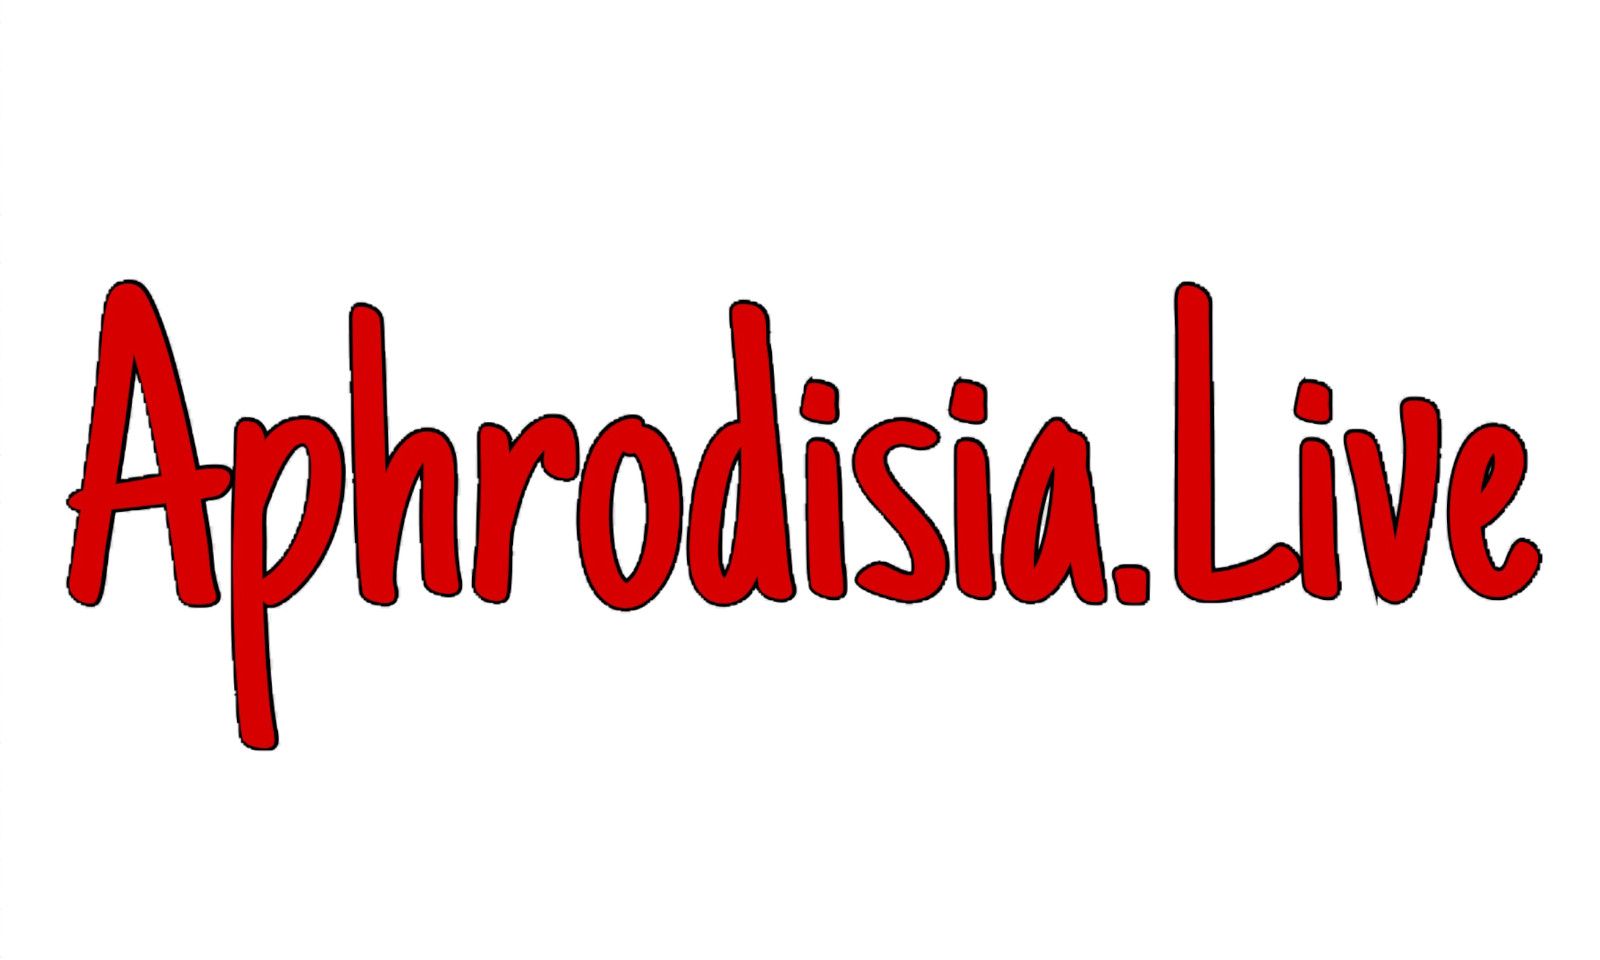 New Adult Platform Aphrodisia.Live Launches